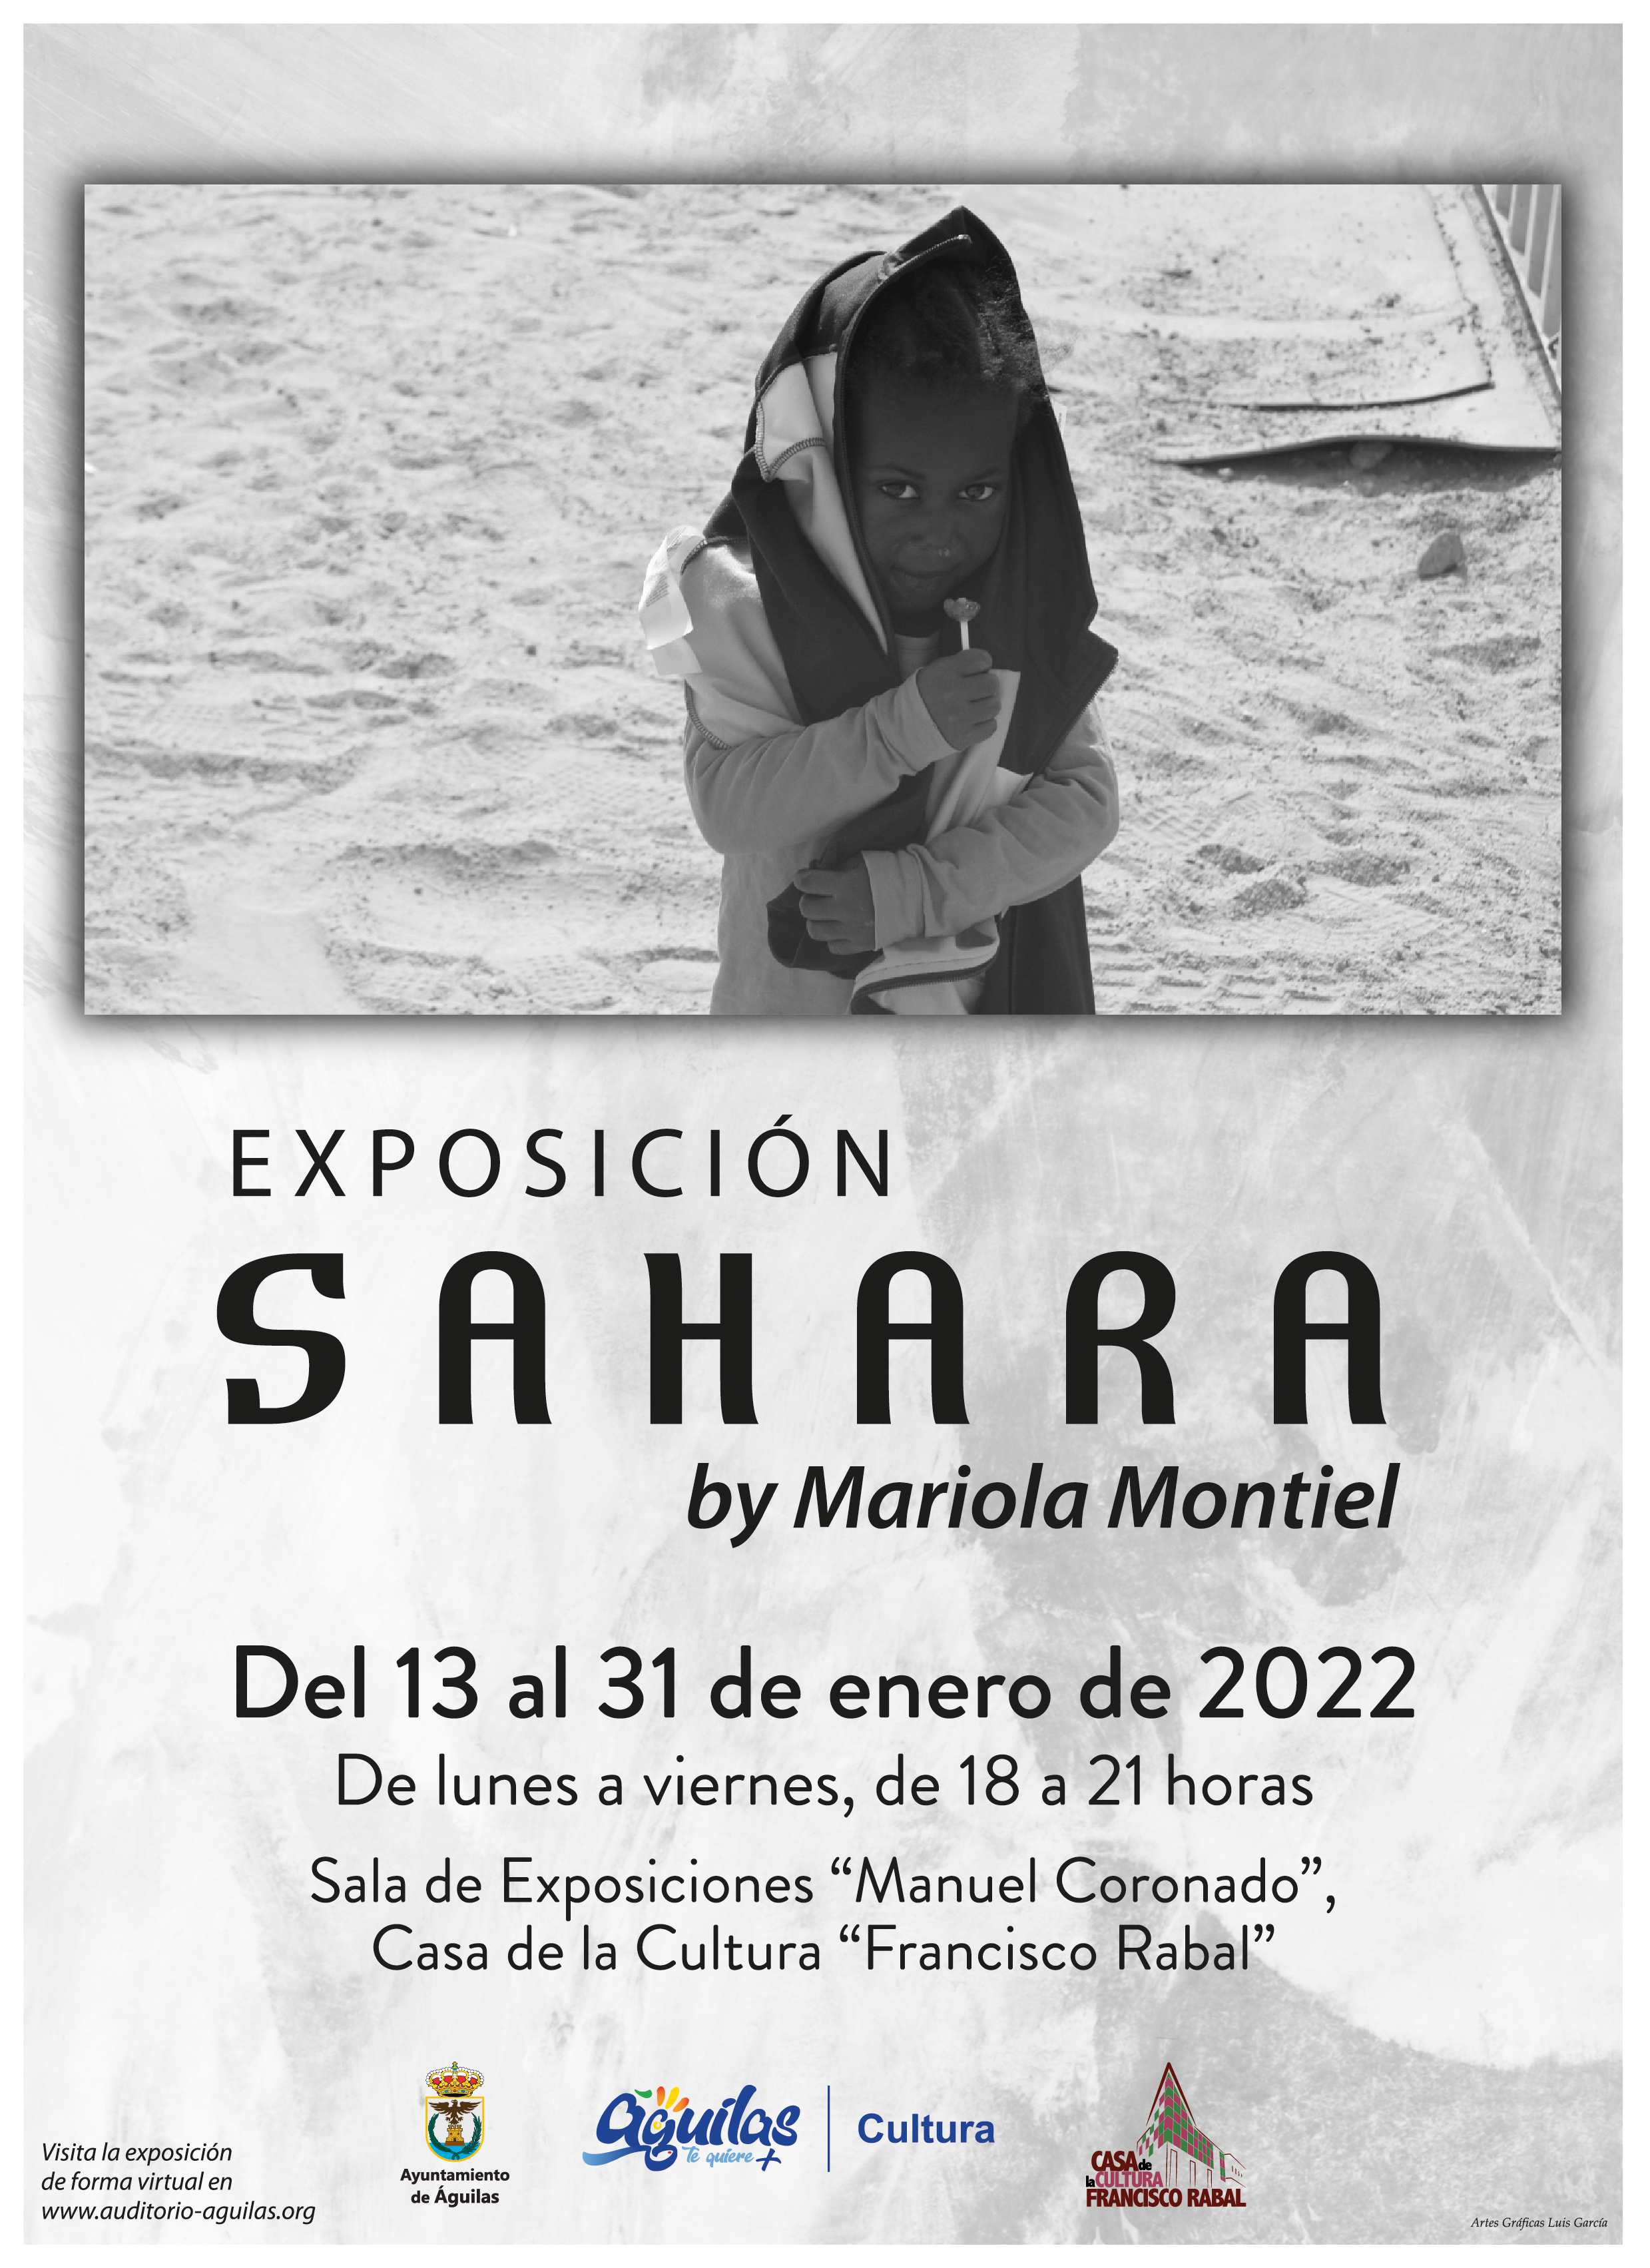 Exposición Sahara by Mariola Montiel